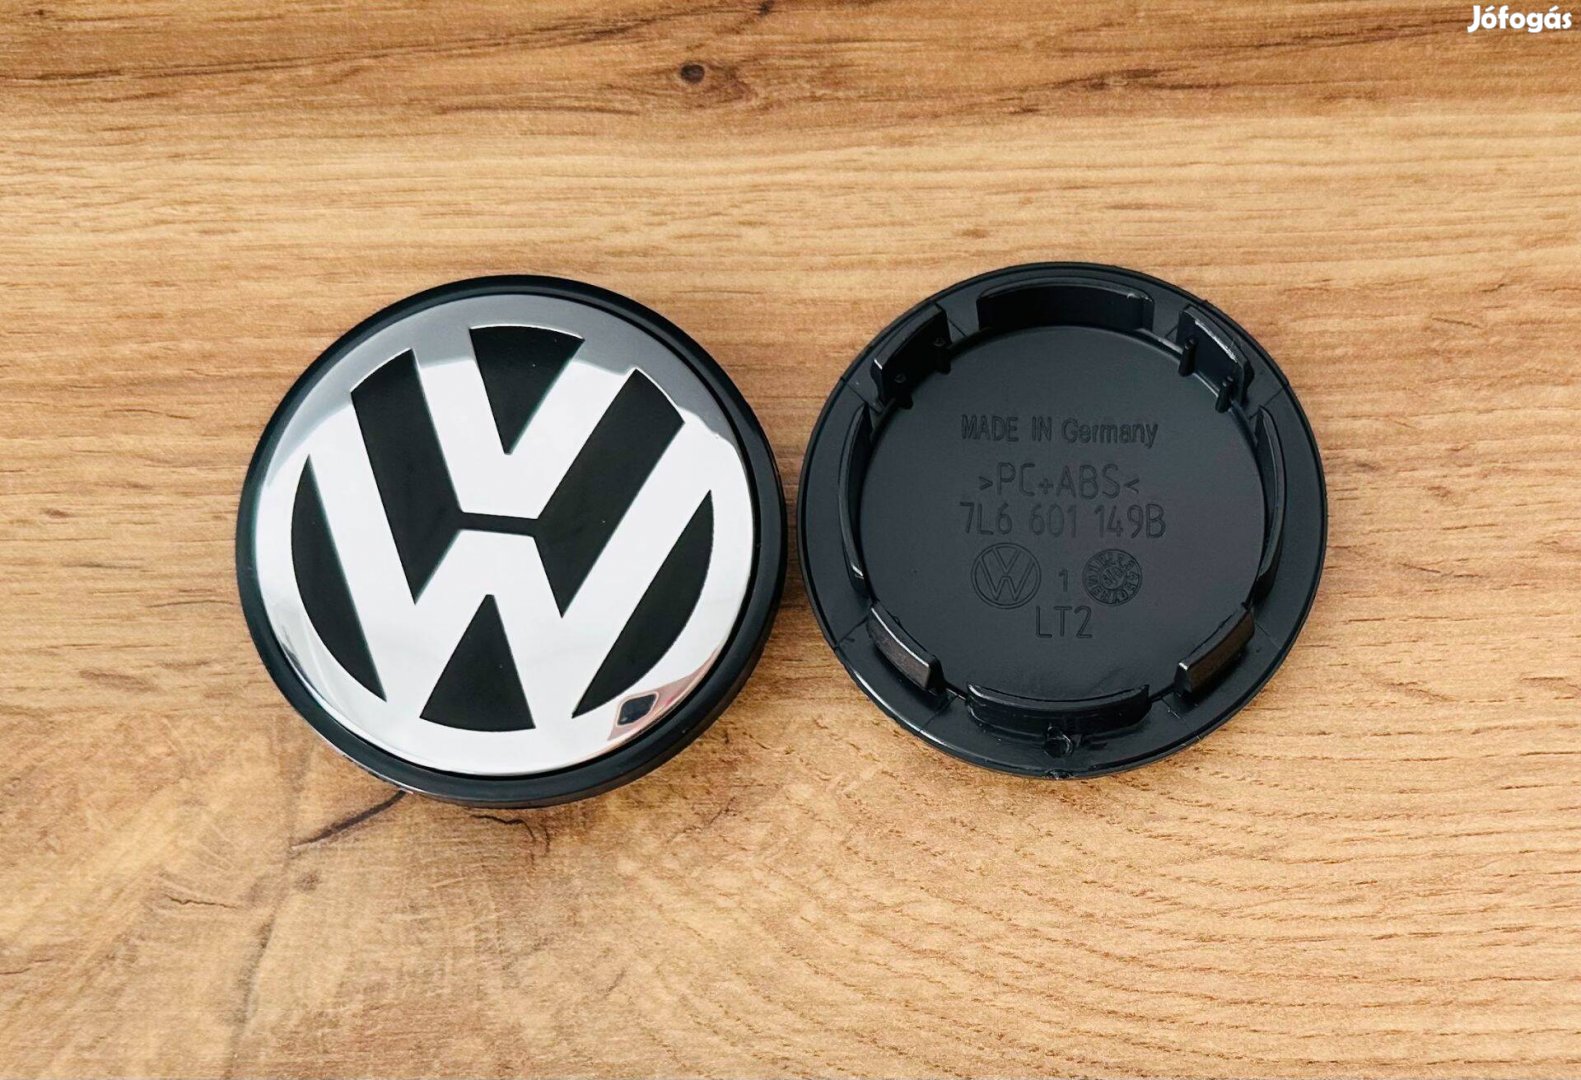 Új Volkswagen 70mm felni kupak felniközép felnikupak 7L6601149B